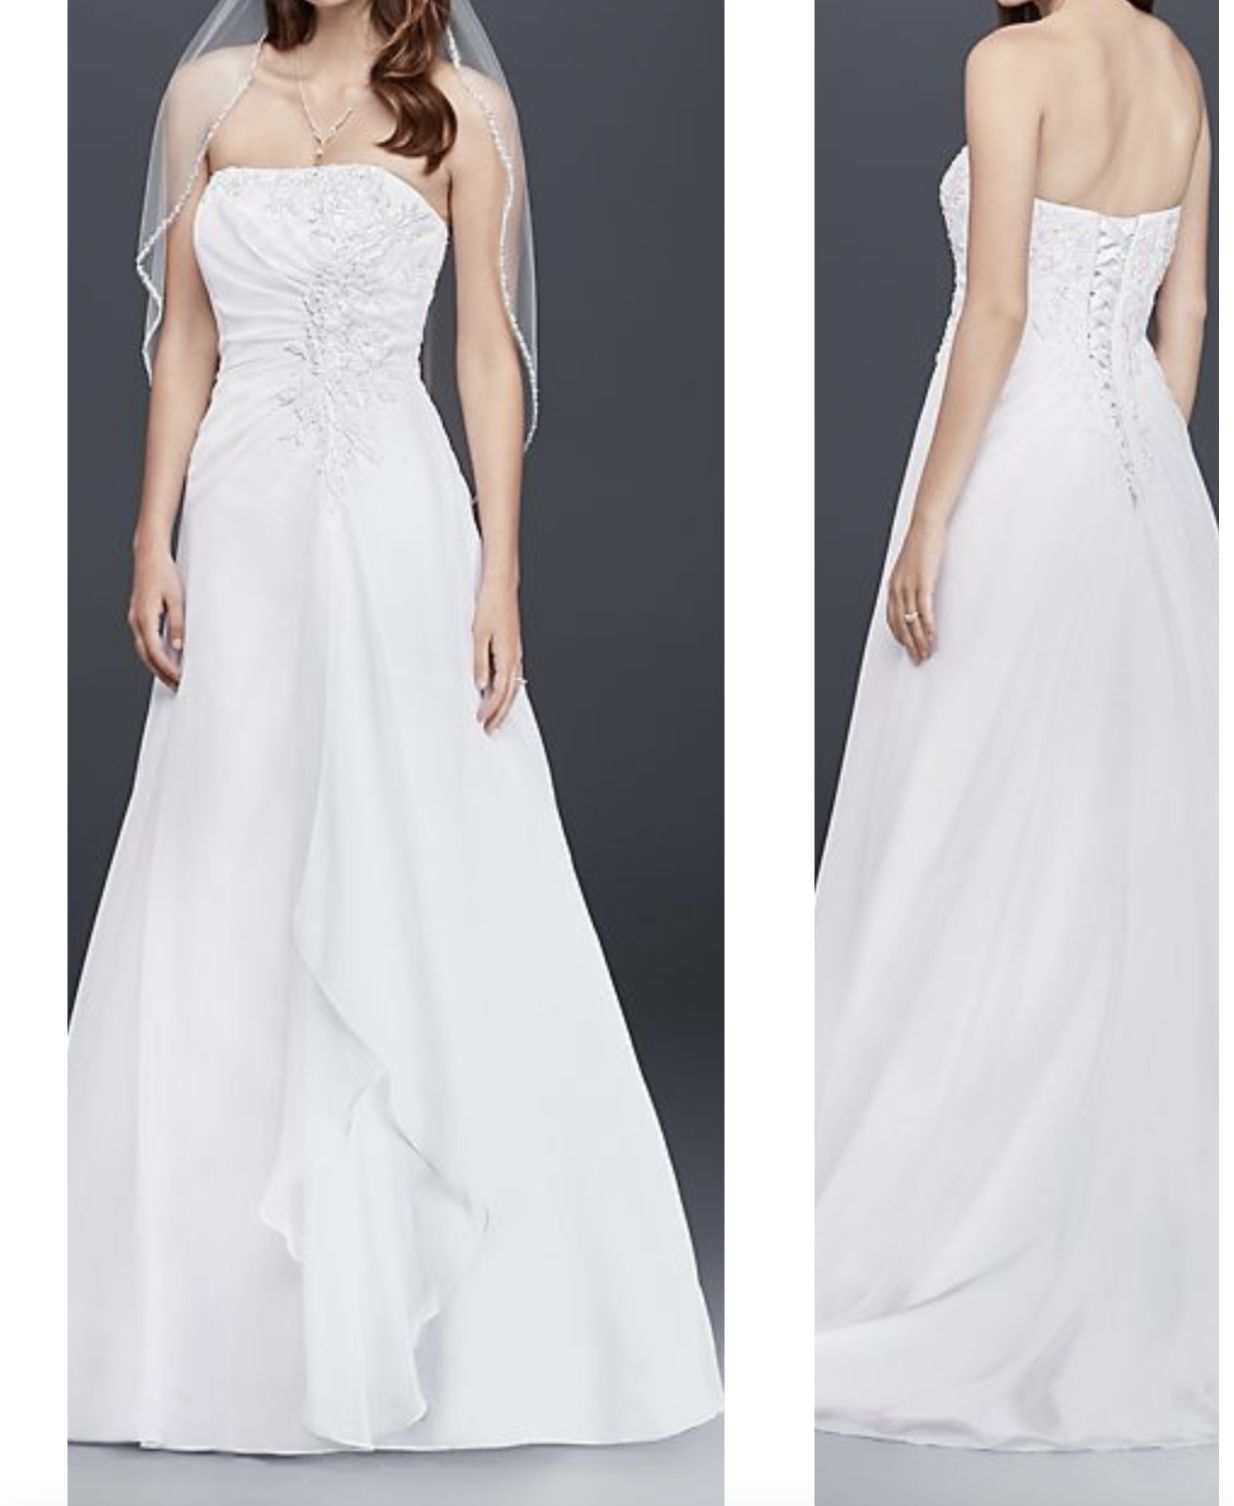 White Wedding Dress Size 14